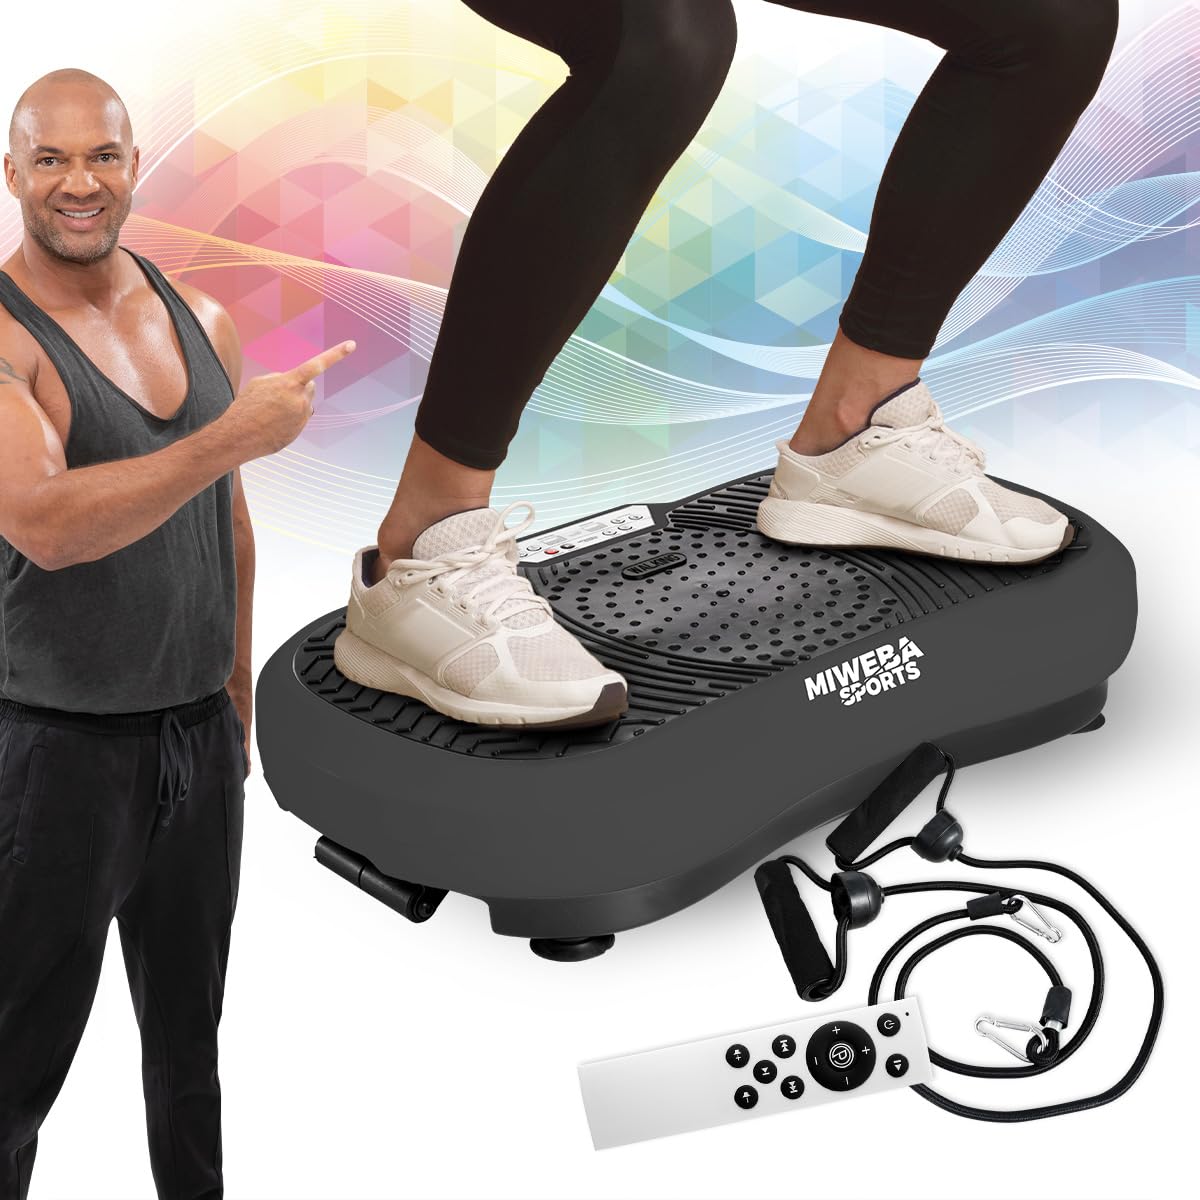 Miweba Sports Fitness 2D Vibrationsplatte MV100 | 3 Jahre Garantie - 250 Watt - 3 multidimensionale Vibrationszonen - Oszillierend - Abnehmen - Fettverbrenner - Fitnessgeräte für Zuhause (Grau)